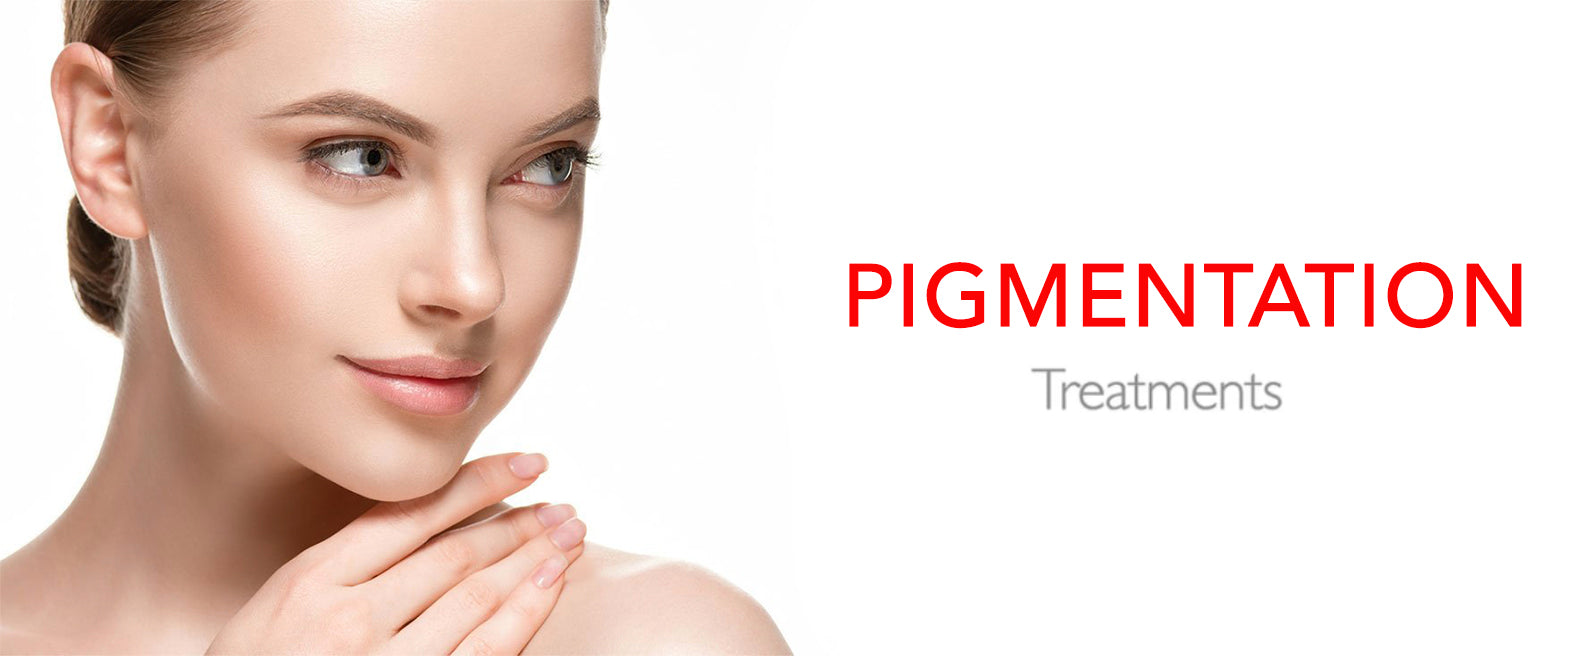 Pigmentation Treatments